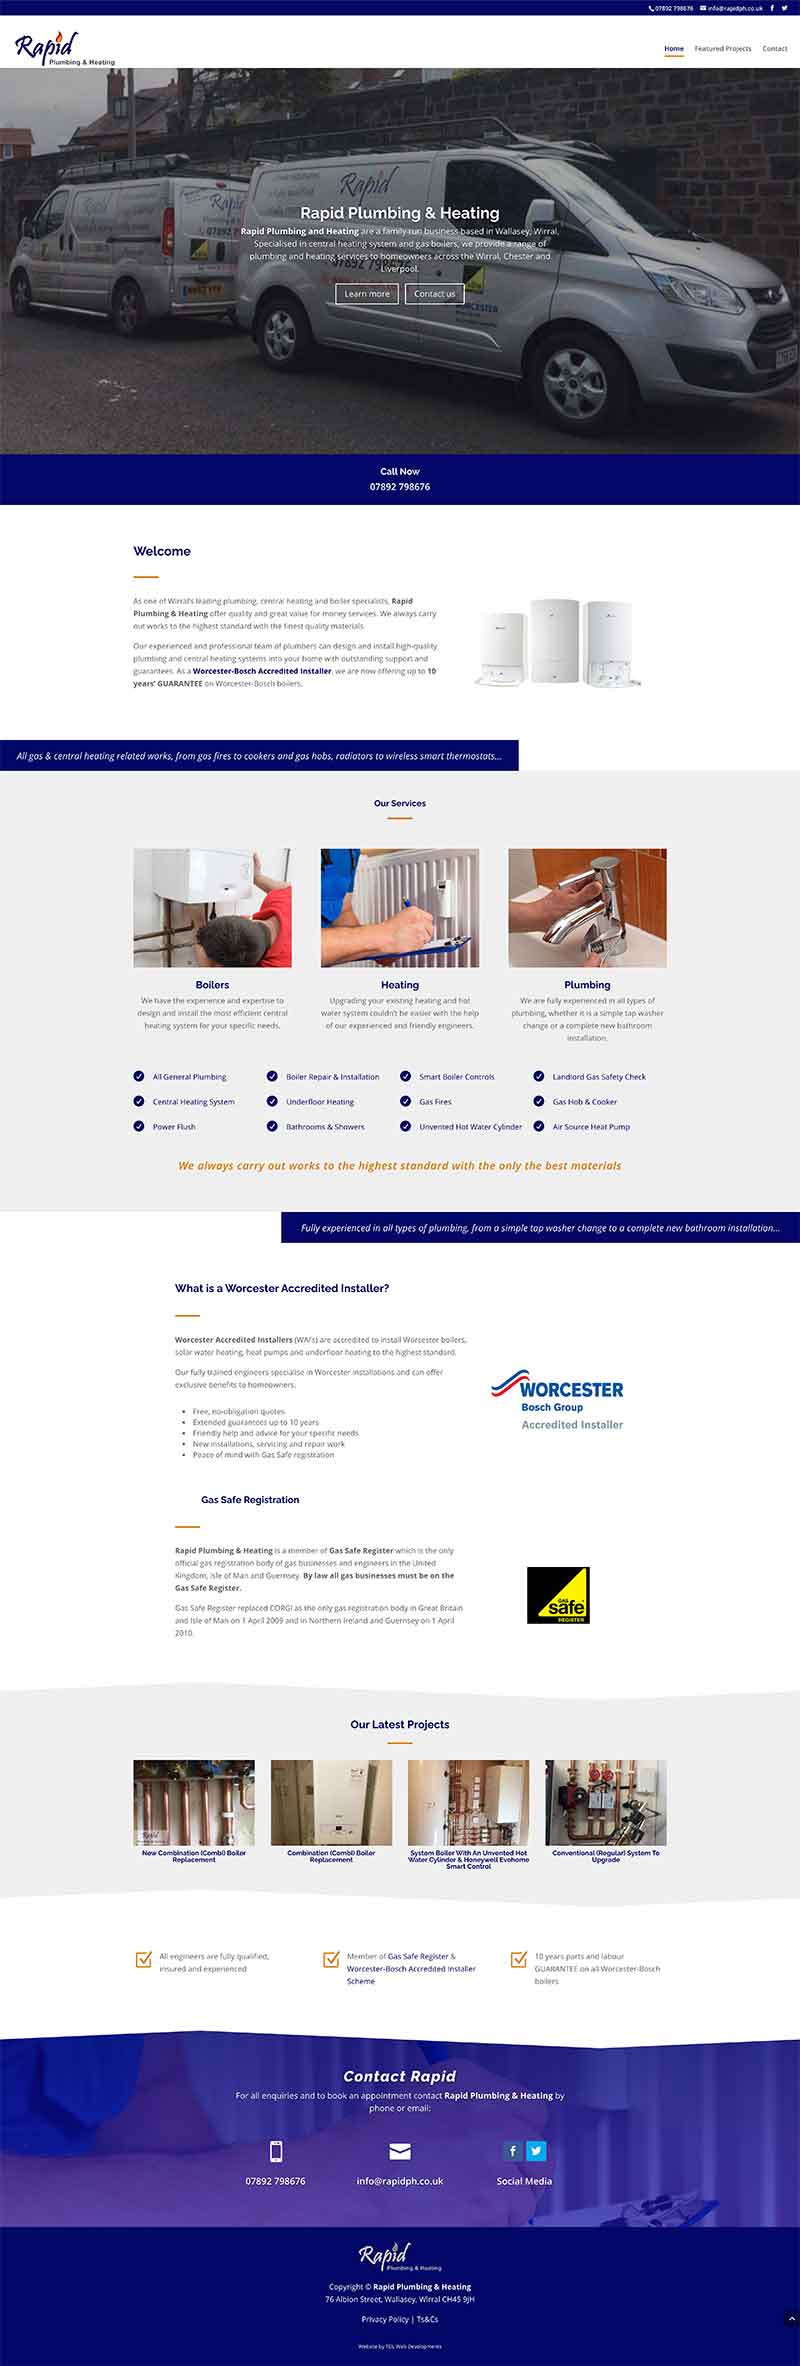 Full page screenshot of Rapid Plumbing & Heating website